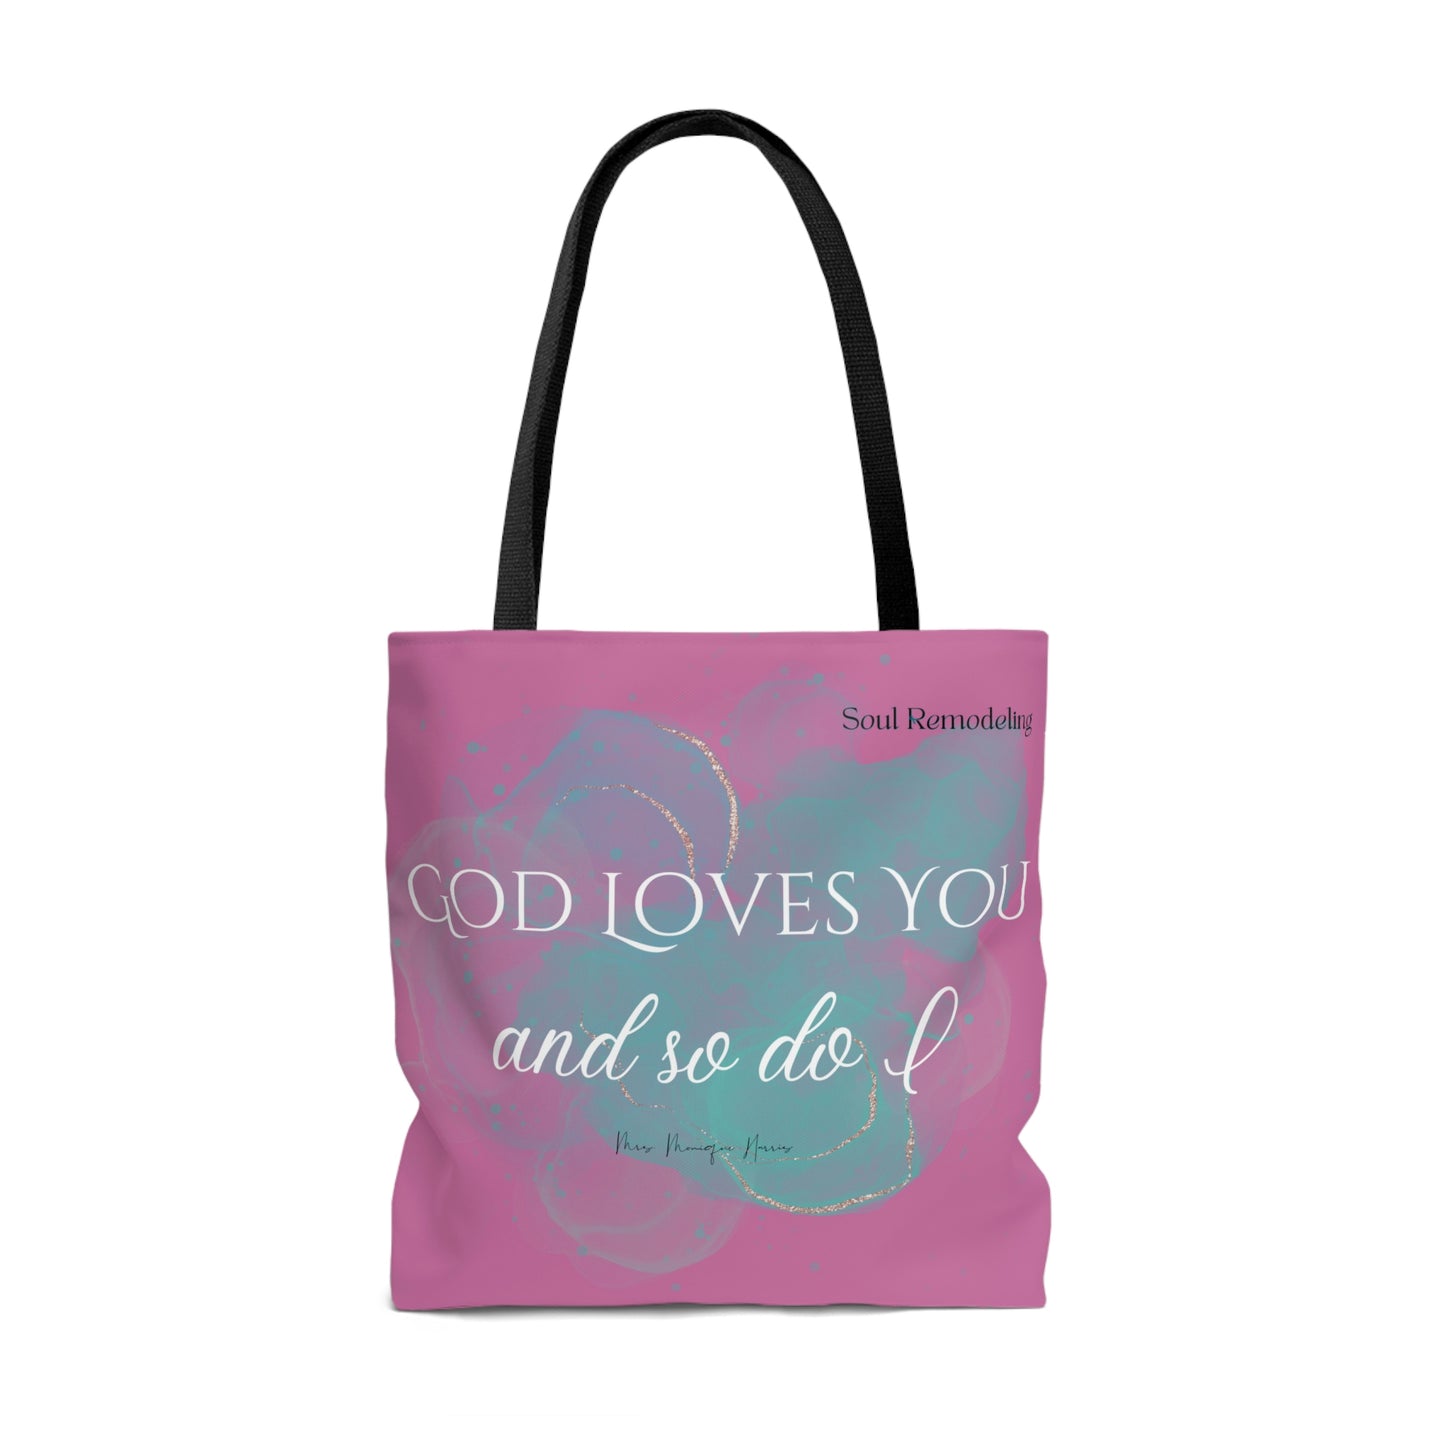 "God Loves You and so do I" Tote Bag